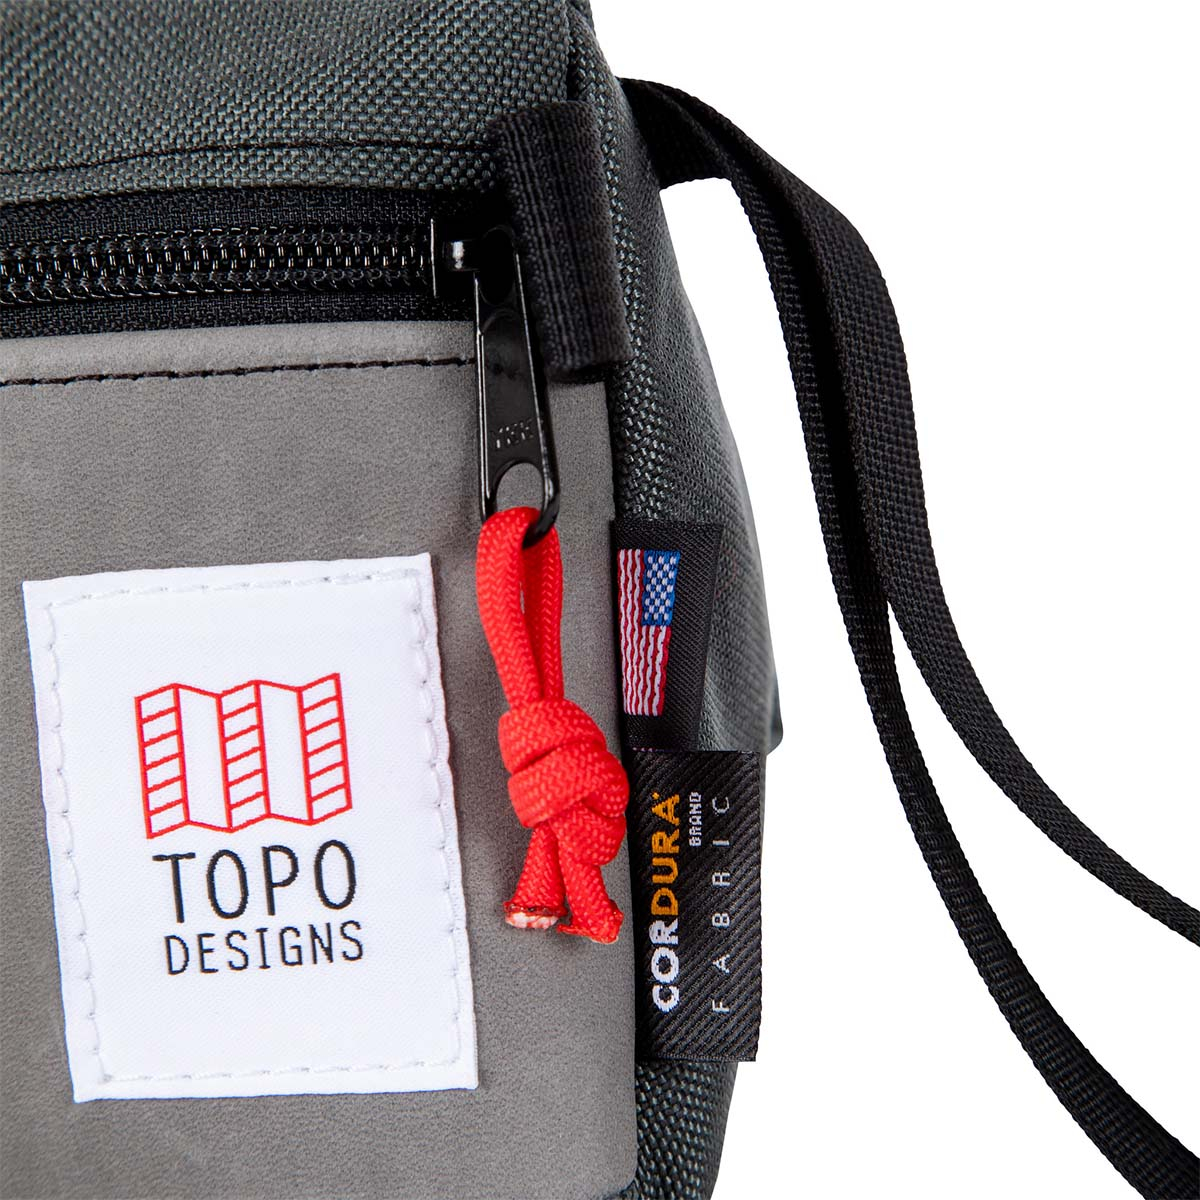 Topo Designs Dopp Kit Charcoal/Charcoal Leather, Kulturbeutel für minimalistisches Reisen